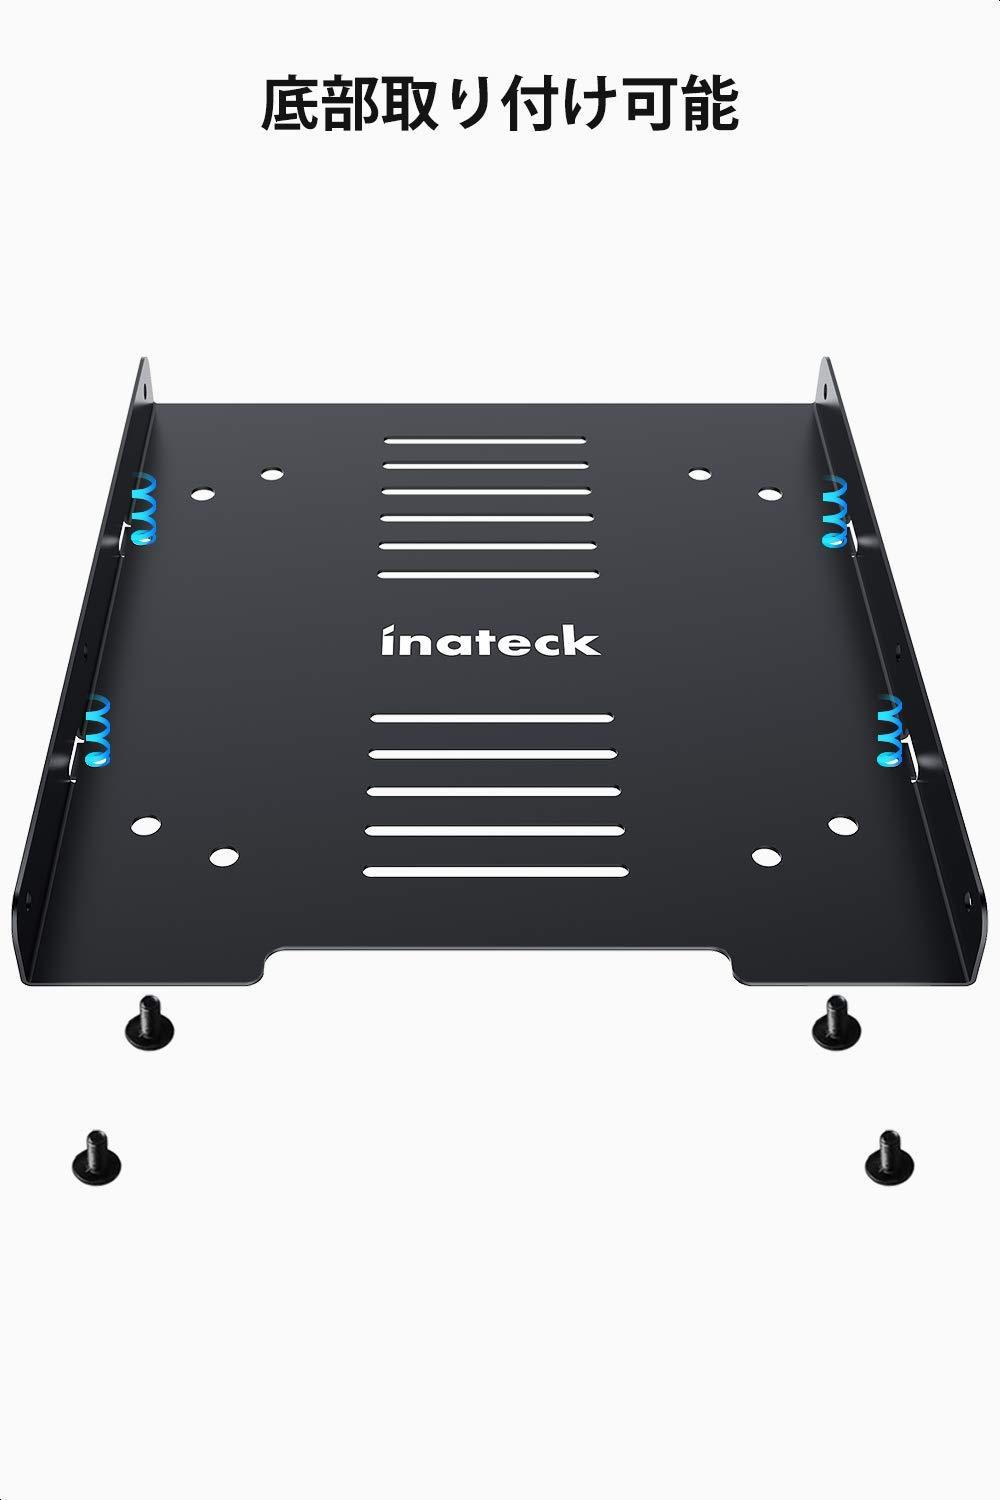 Inateckハードドライブ取り付けブラケットキット、SA04003 - Inateckバックパックジャパン